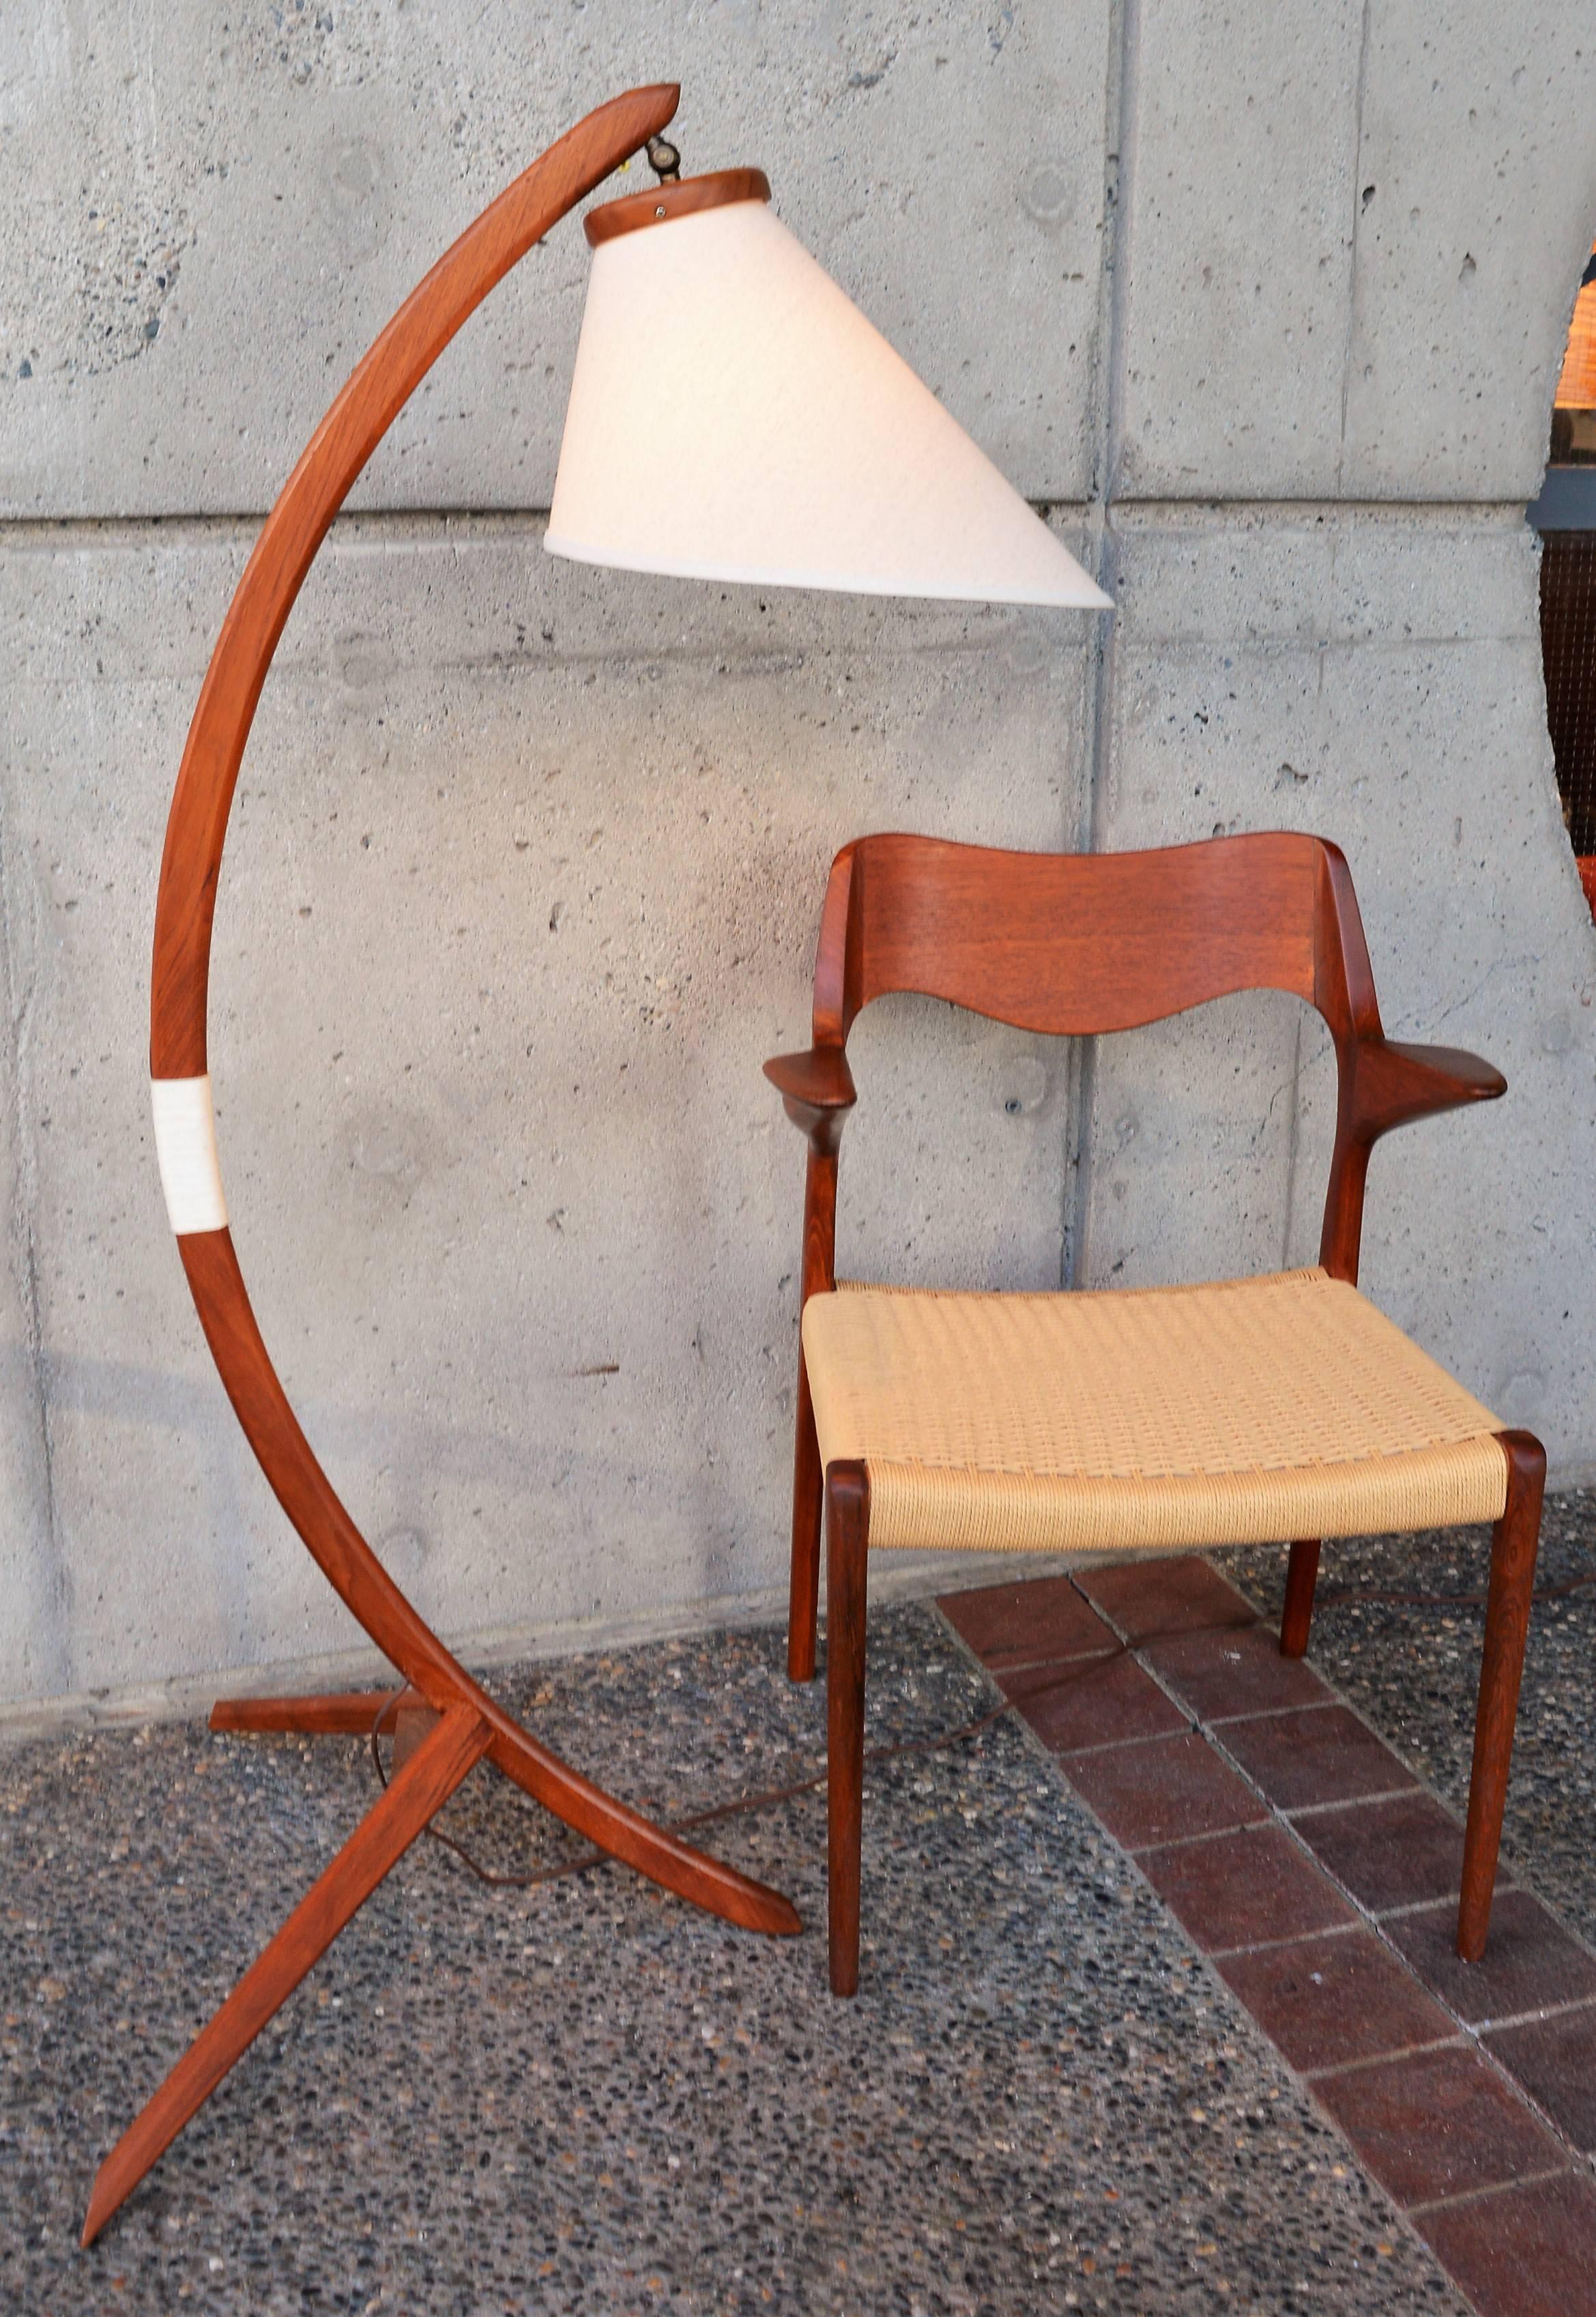 Scandinavian Danish Teak Arc or Bow Tripod Floor Lamp with New Bonnet Shade, Rispal Style